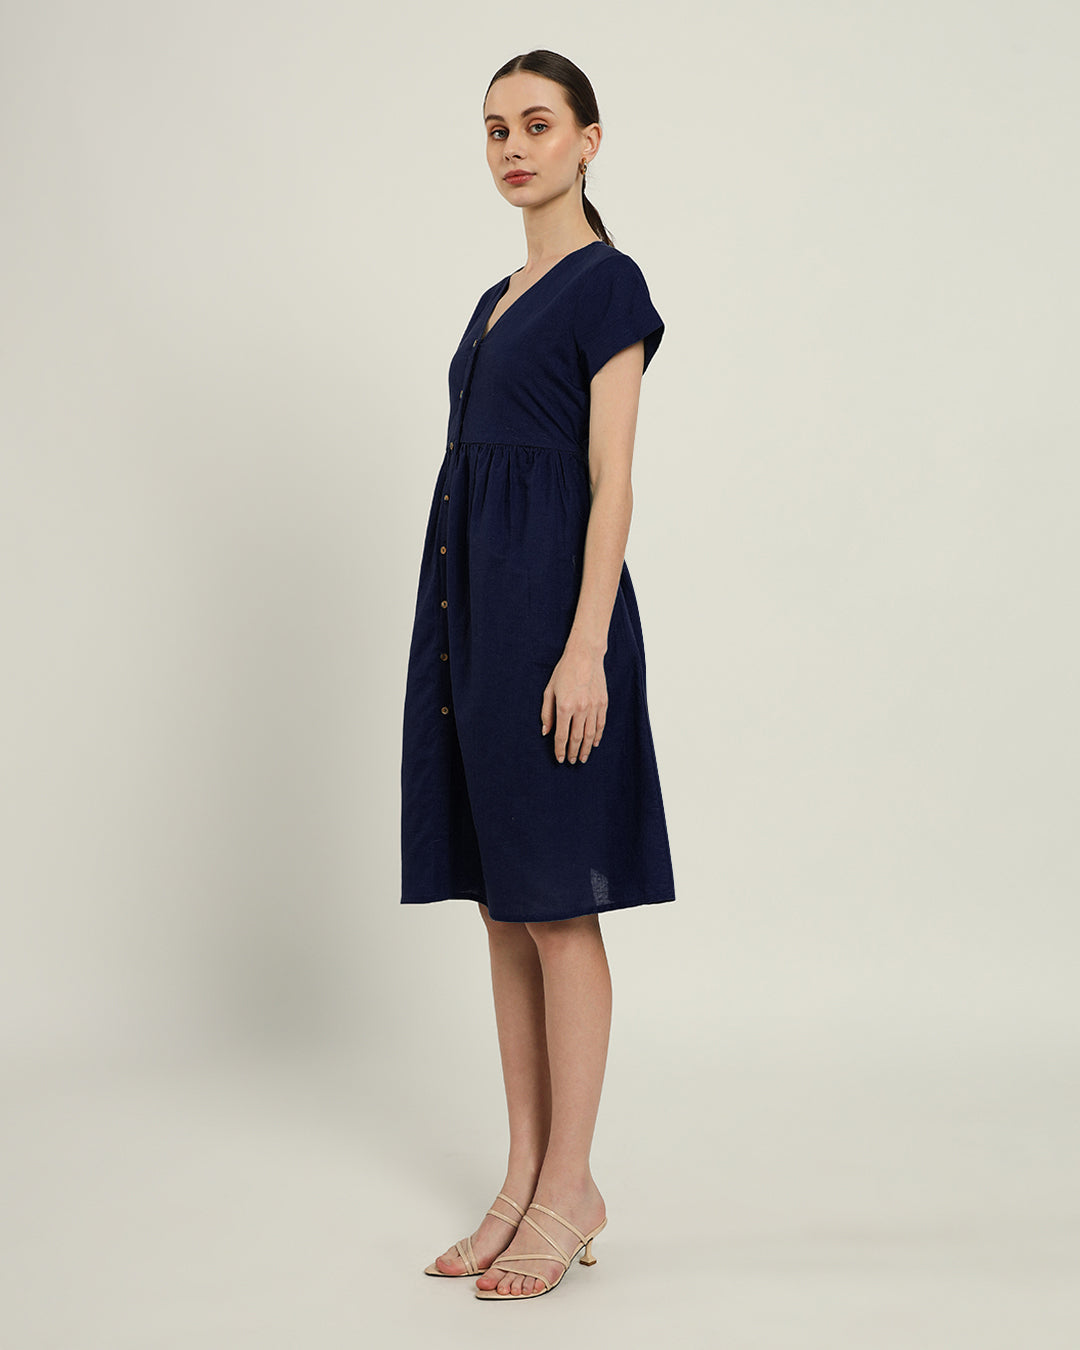 The Valence Daisy Midnight Blue Linen Dress